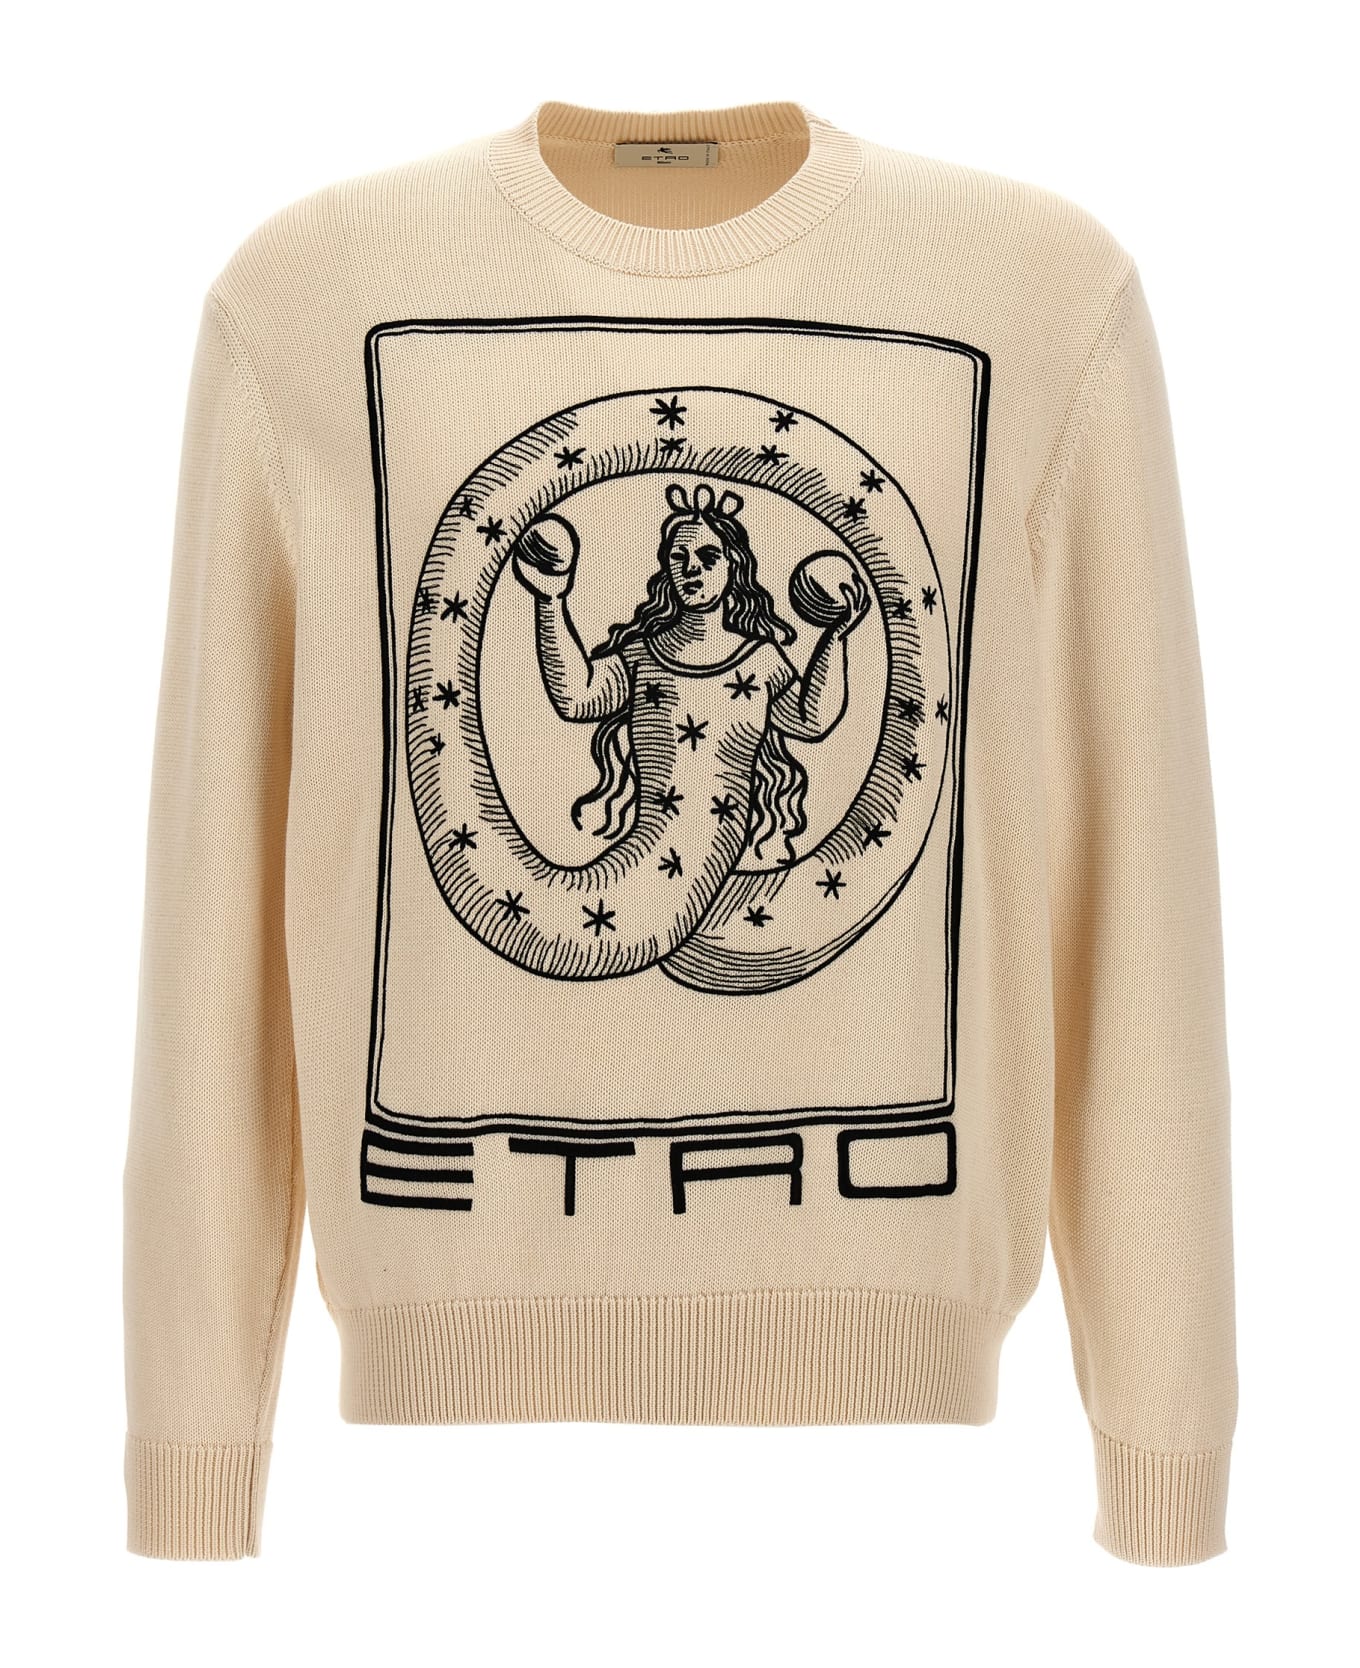 Etro Logo Embroidery Sweater - Beige ニットウェア